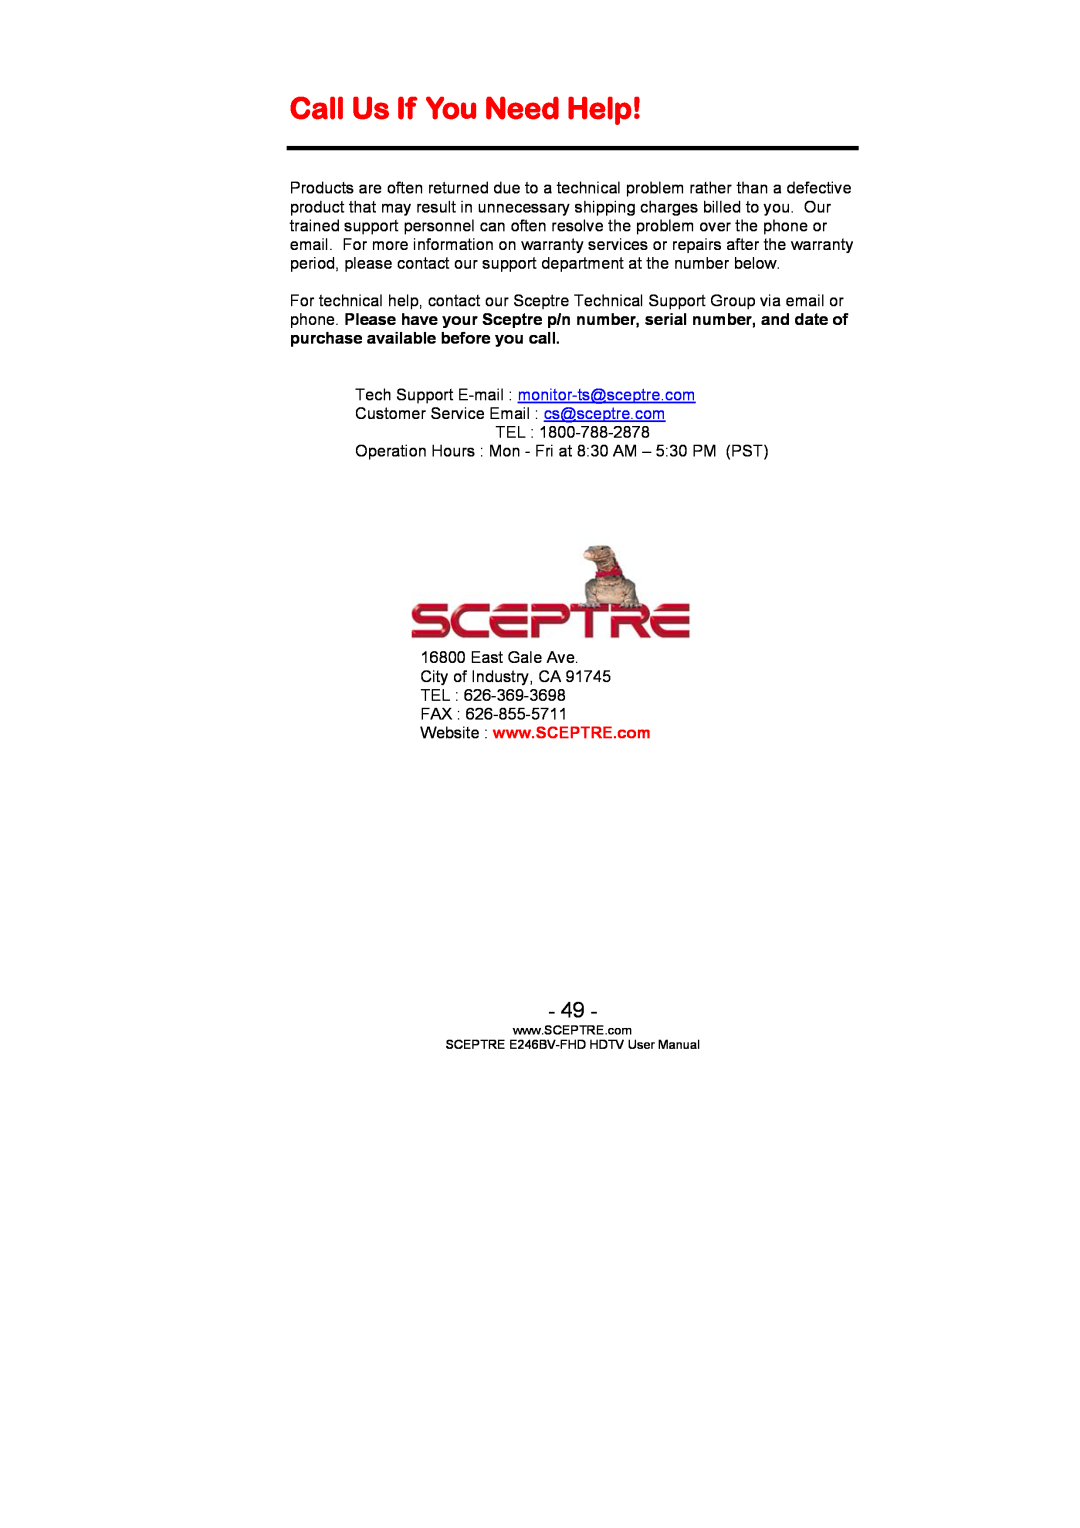 Sceptre Technologies LED HDTV, E246BV-FHD, E236BV-FHD user manual Call Us If You Need Help 